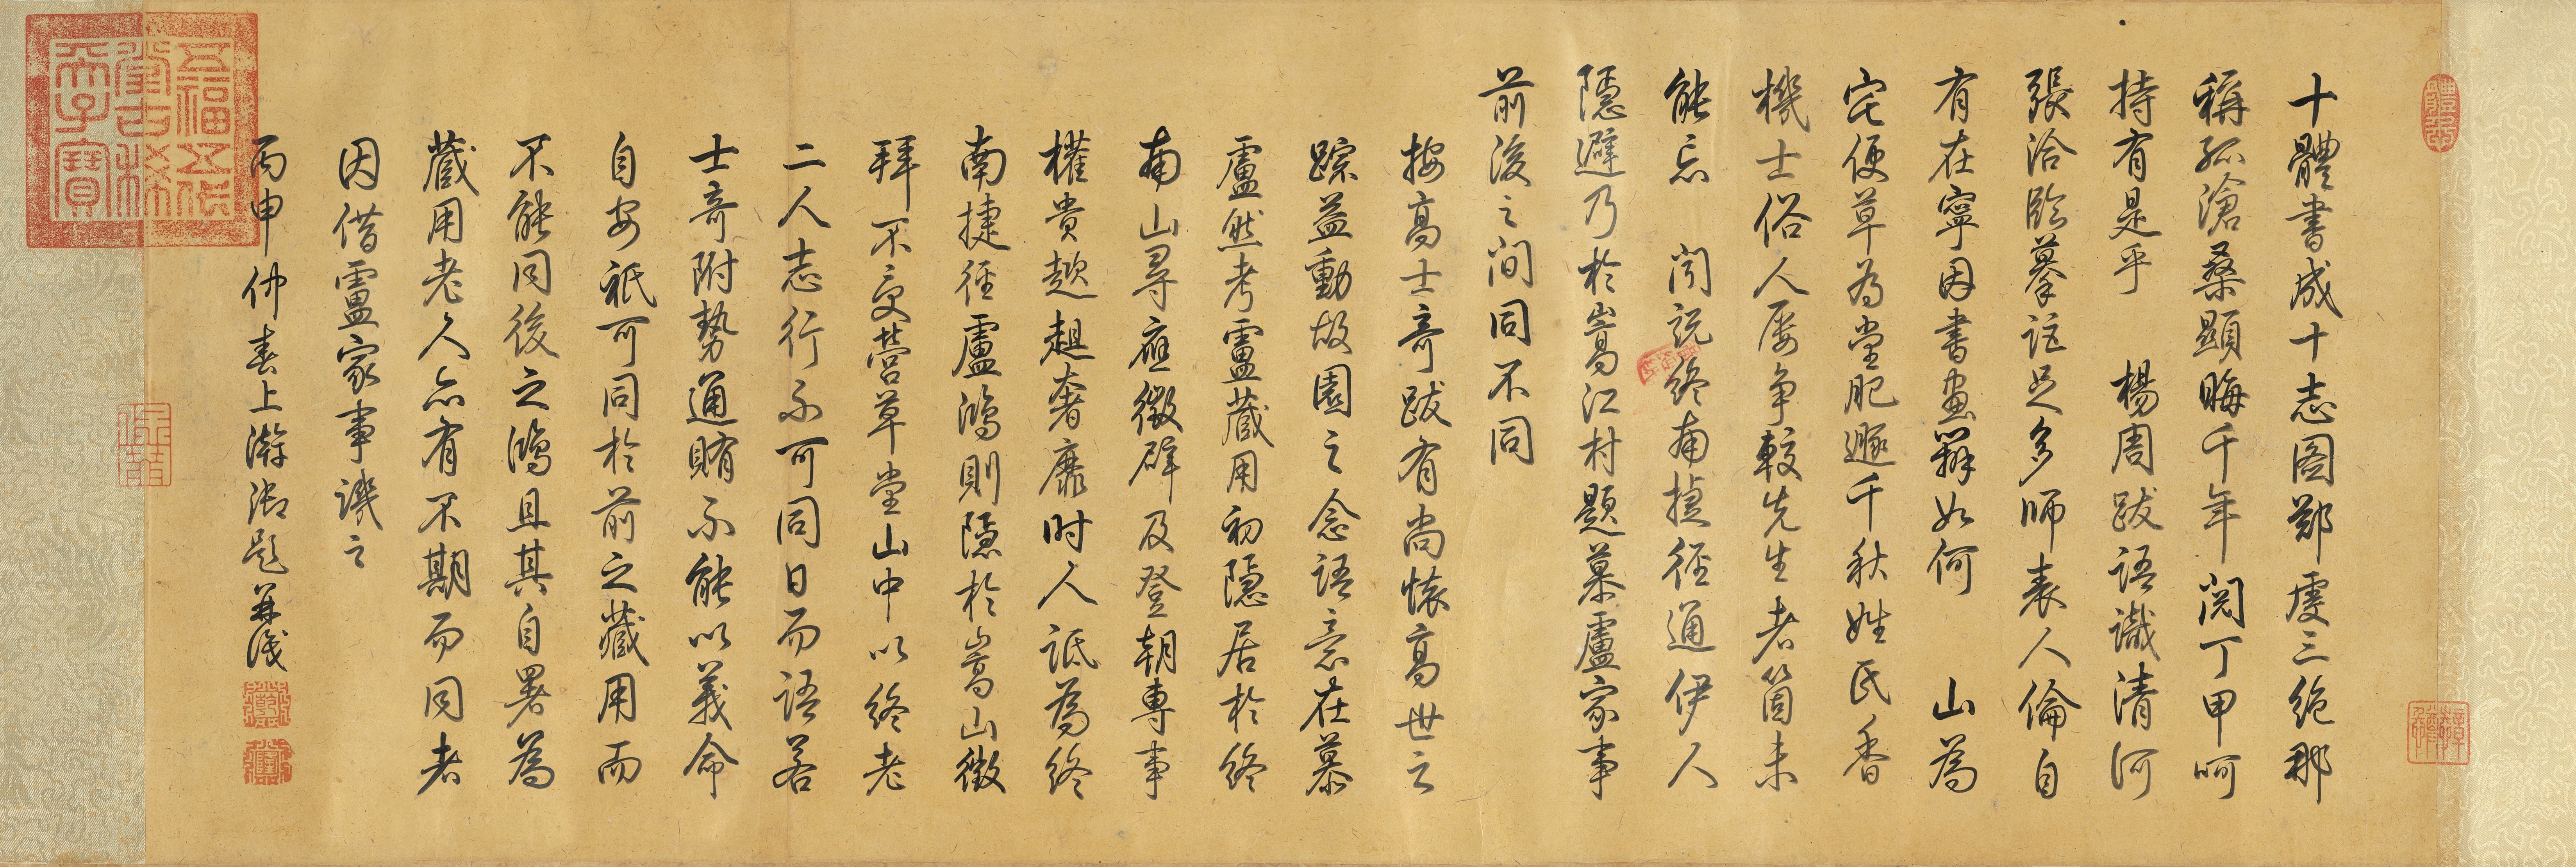 China Chinese Chinese Characters 6595x2220